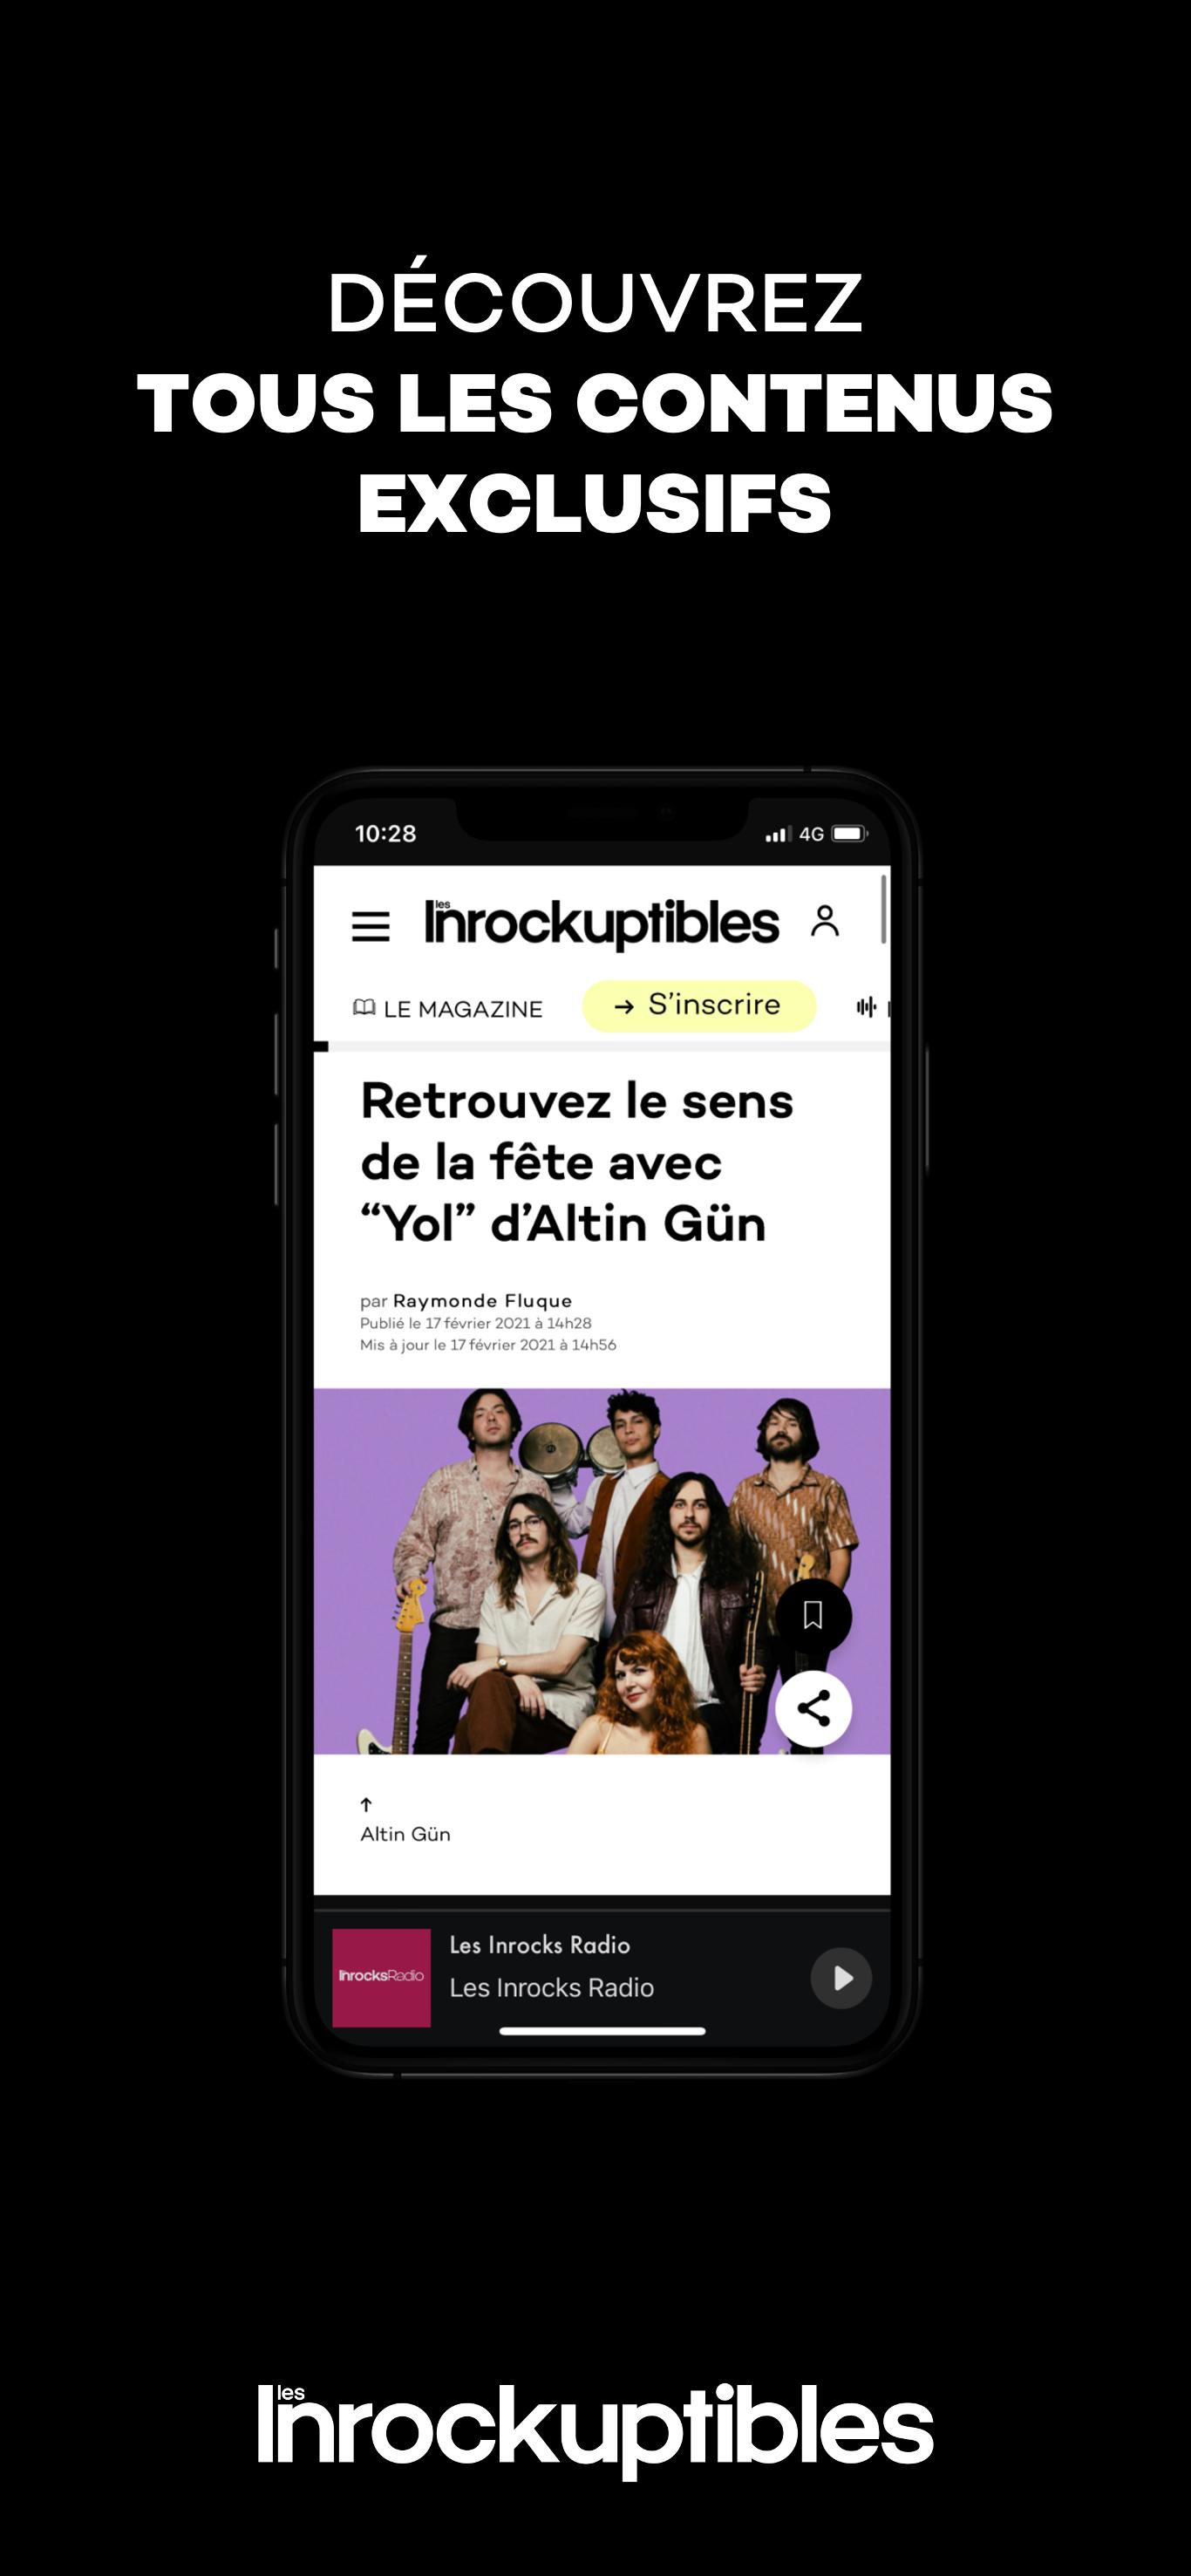 Les Inrockuptibles - playlists, articles et vidéos 6.4.3 Screenshot 3